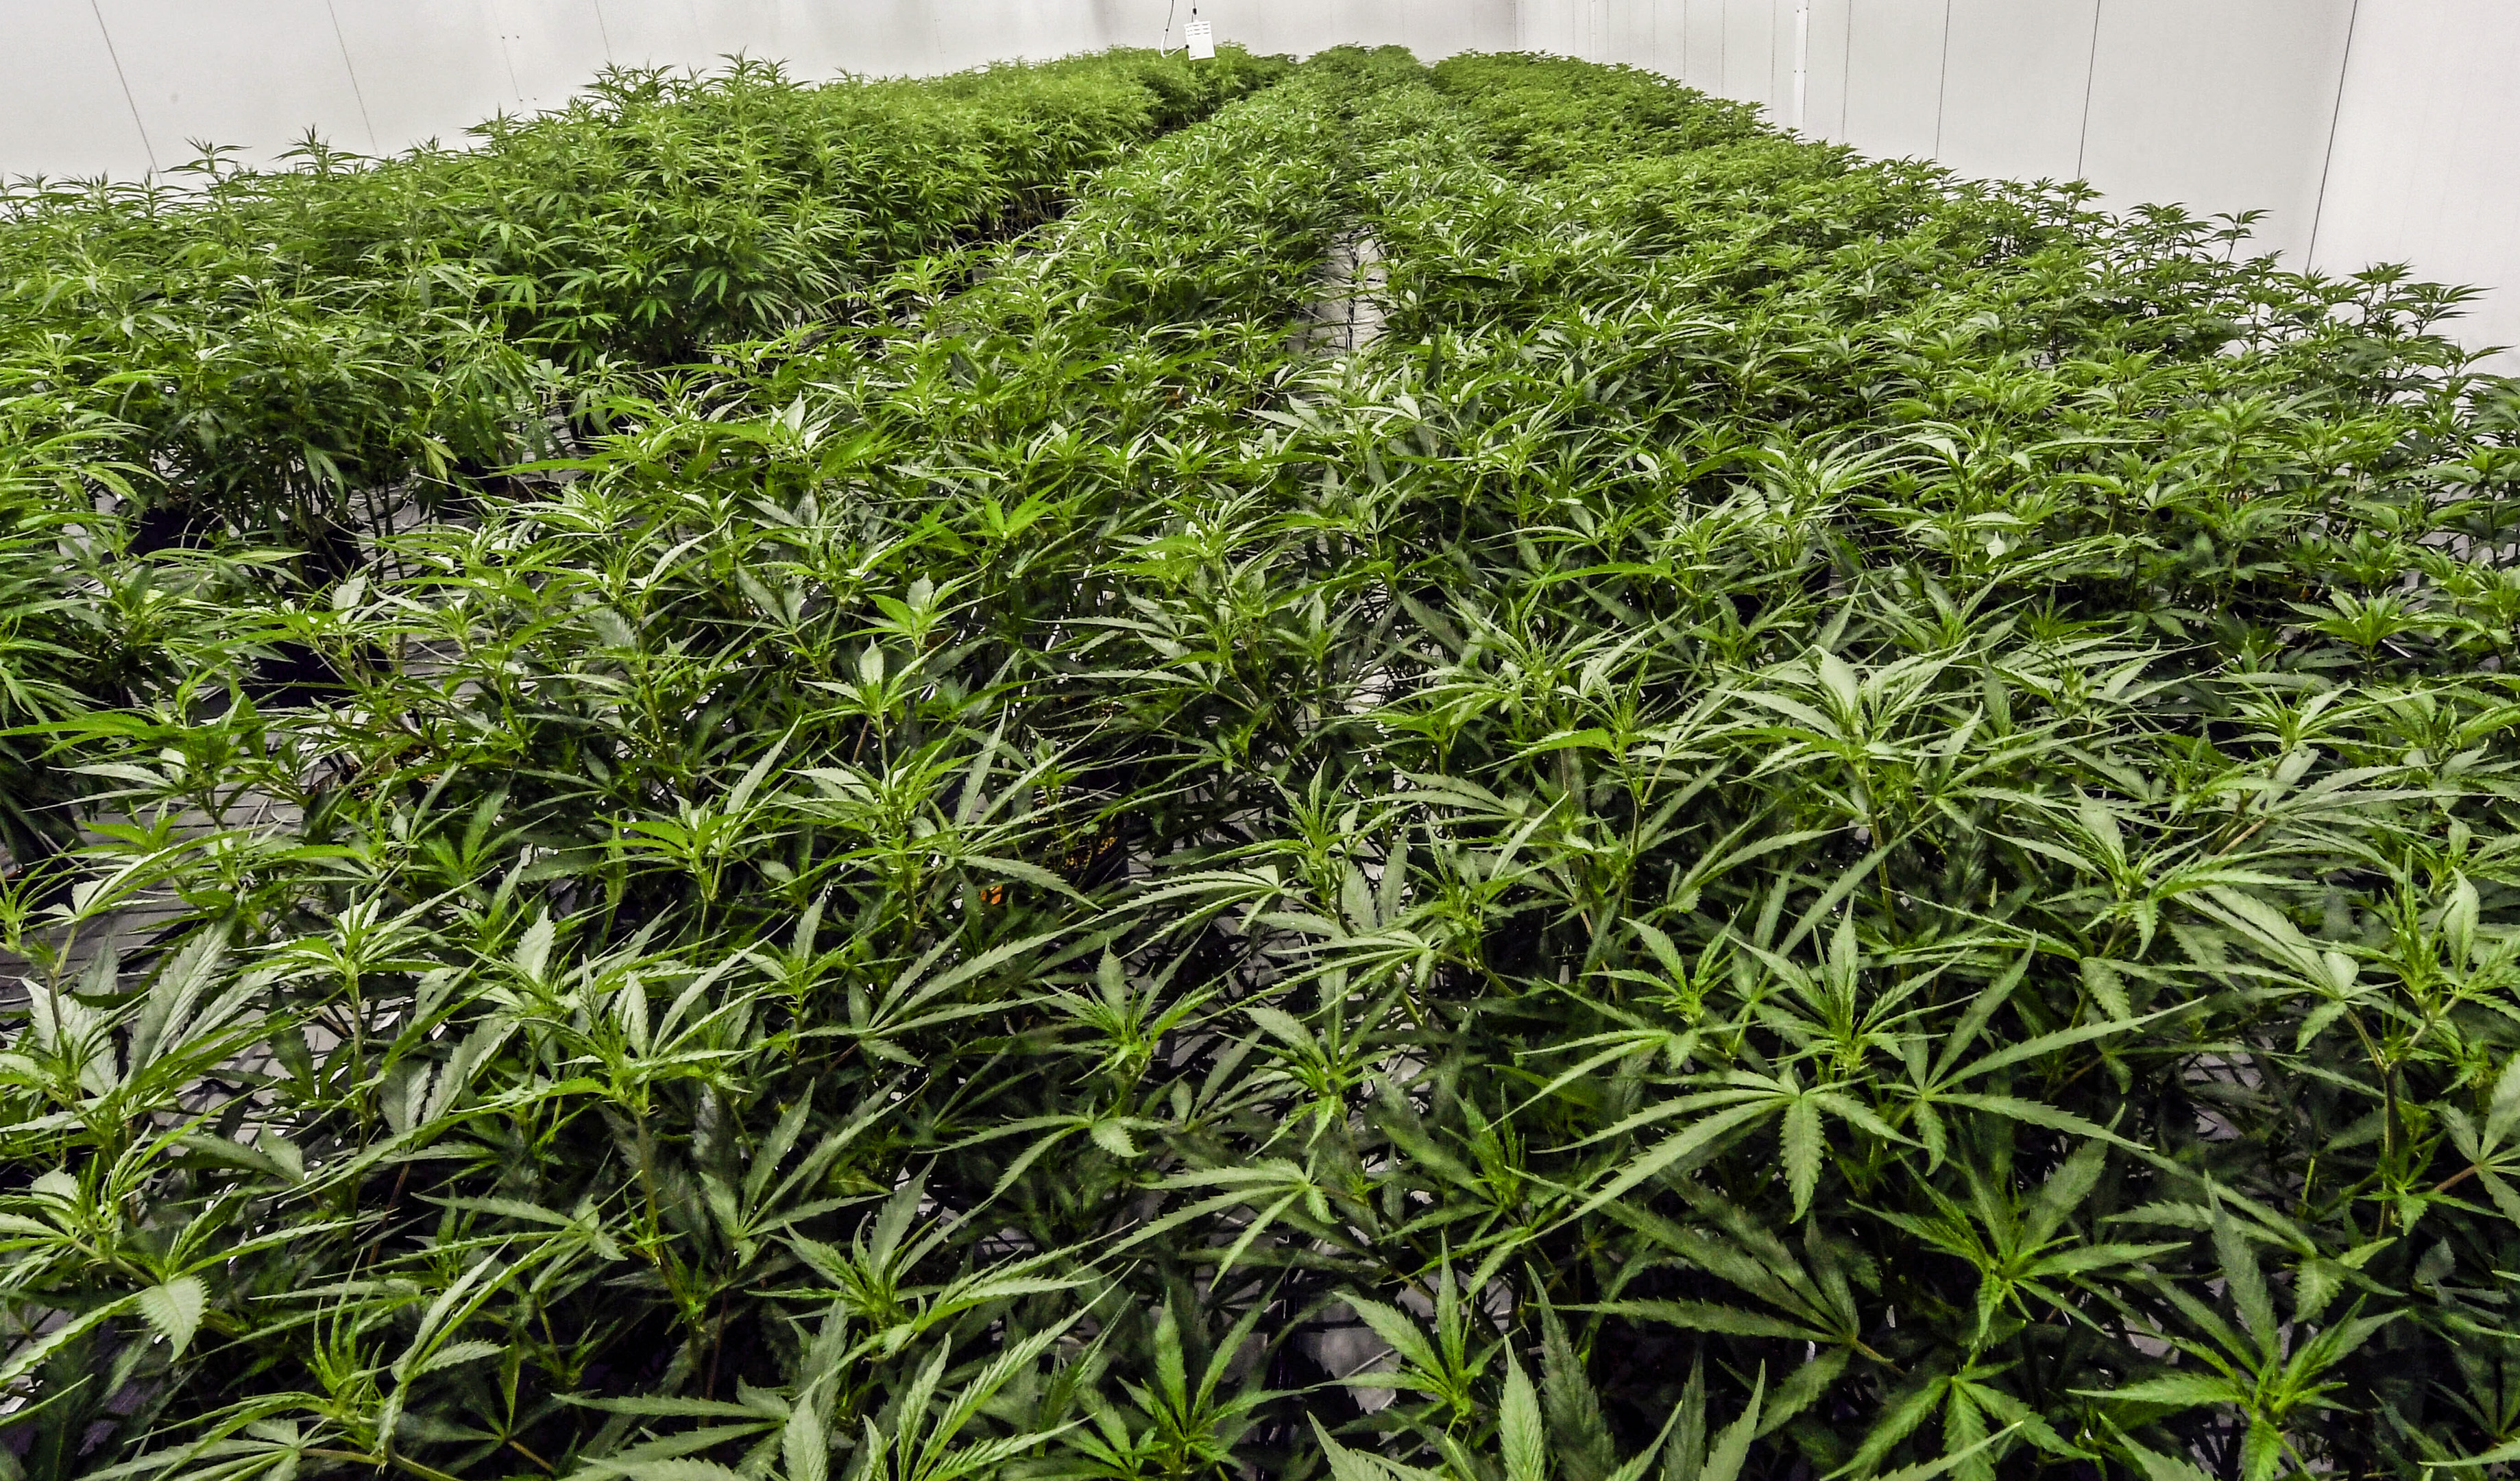 Giant Florida marijuana grow house sets stage for recreational pot